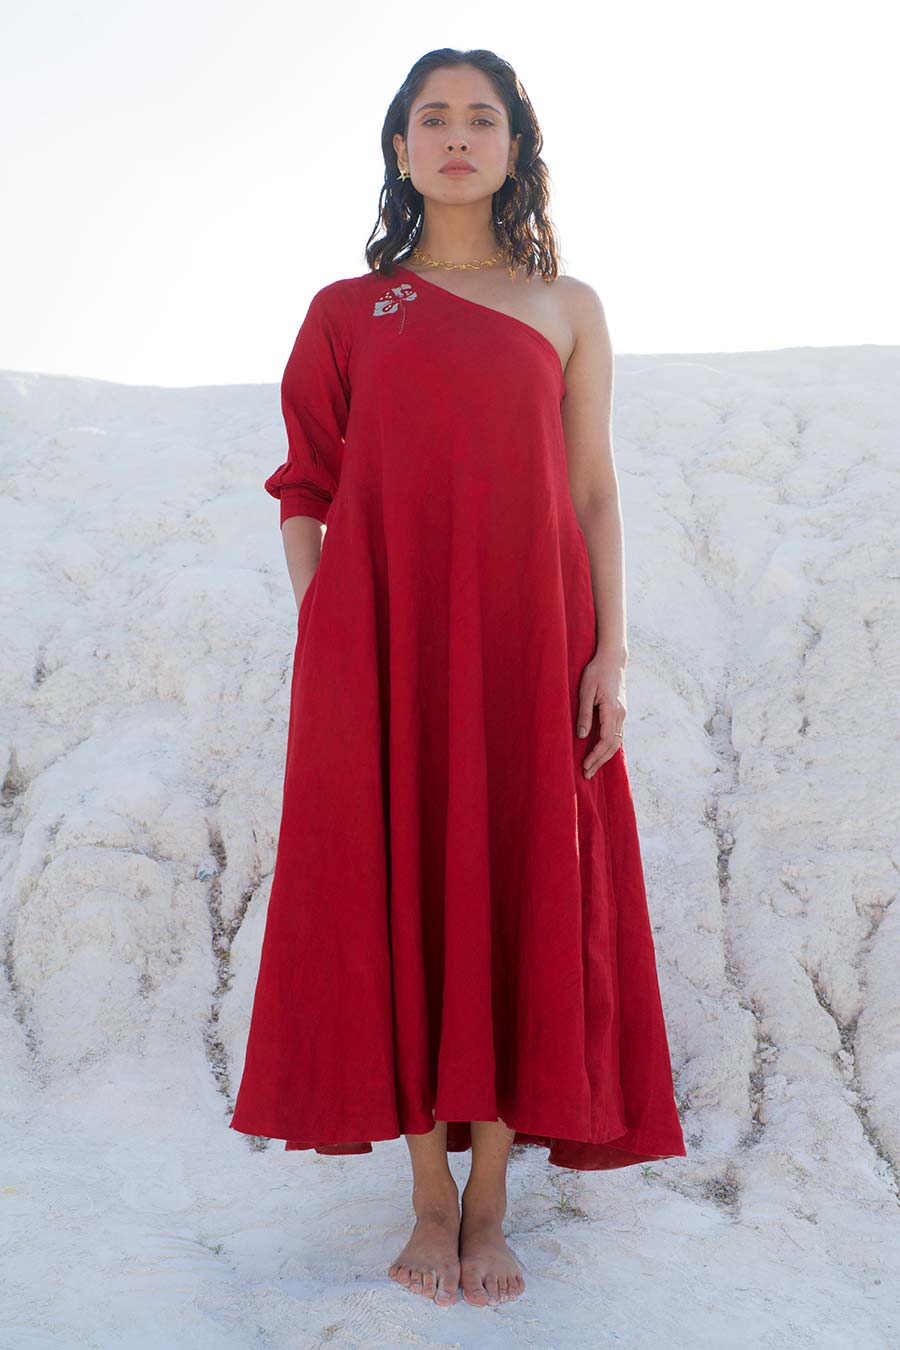 Red One-Shoulder Embroidered Dress